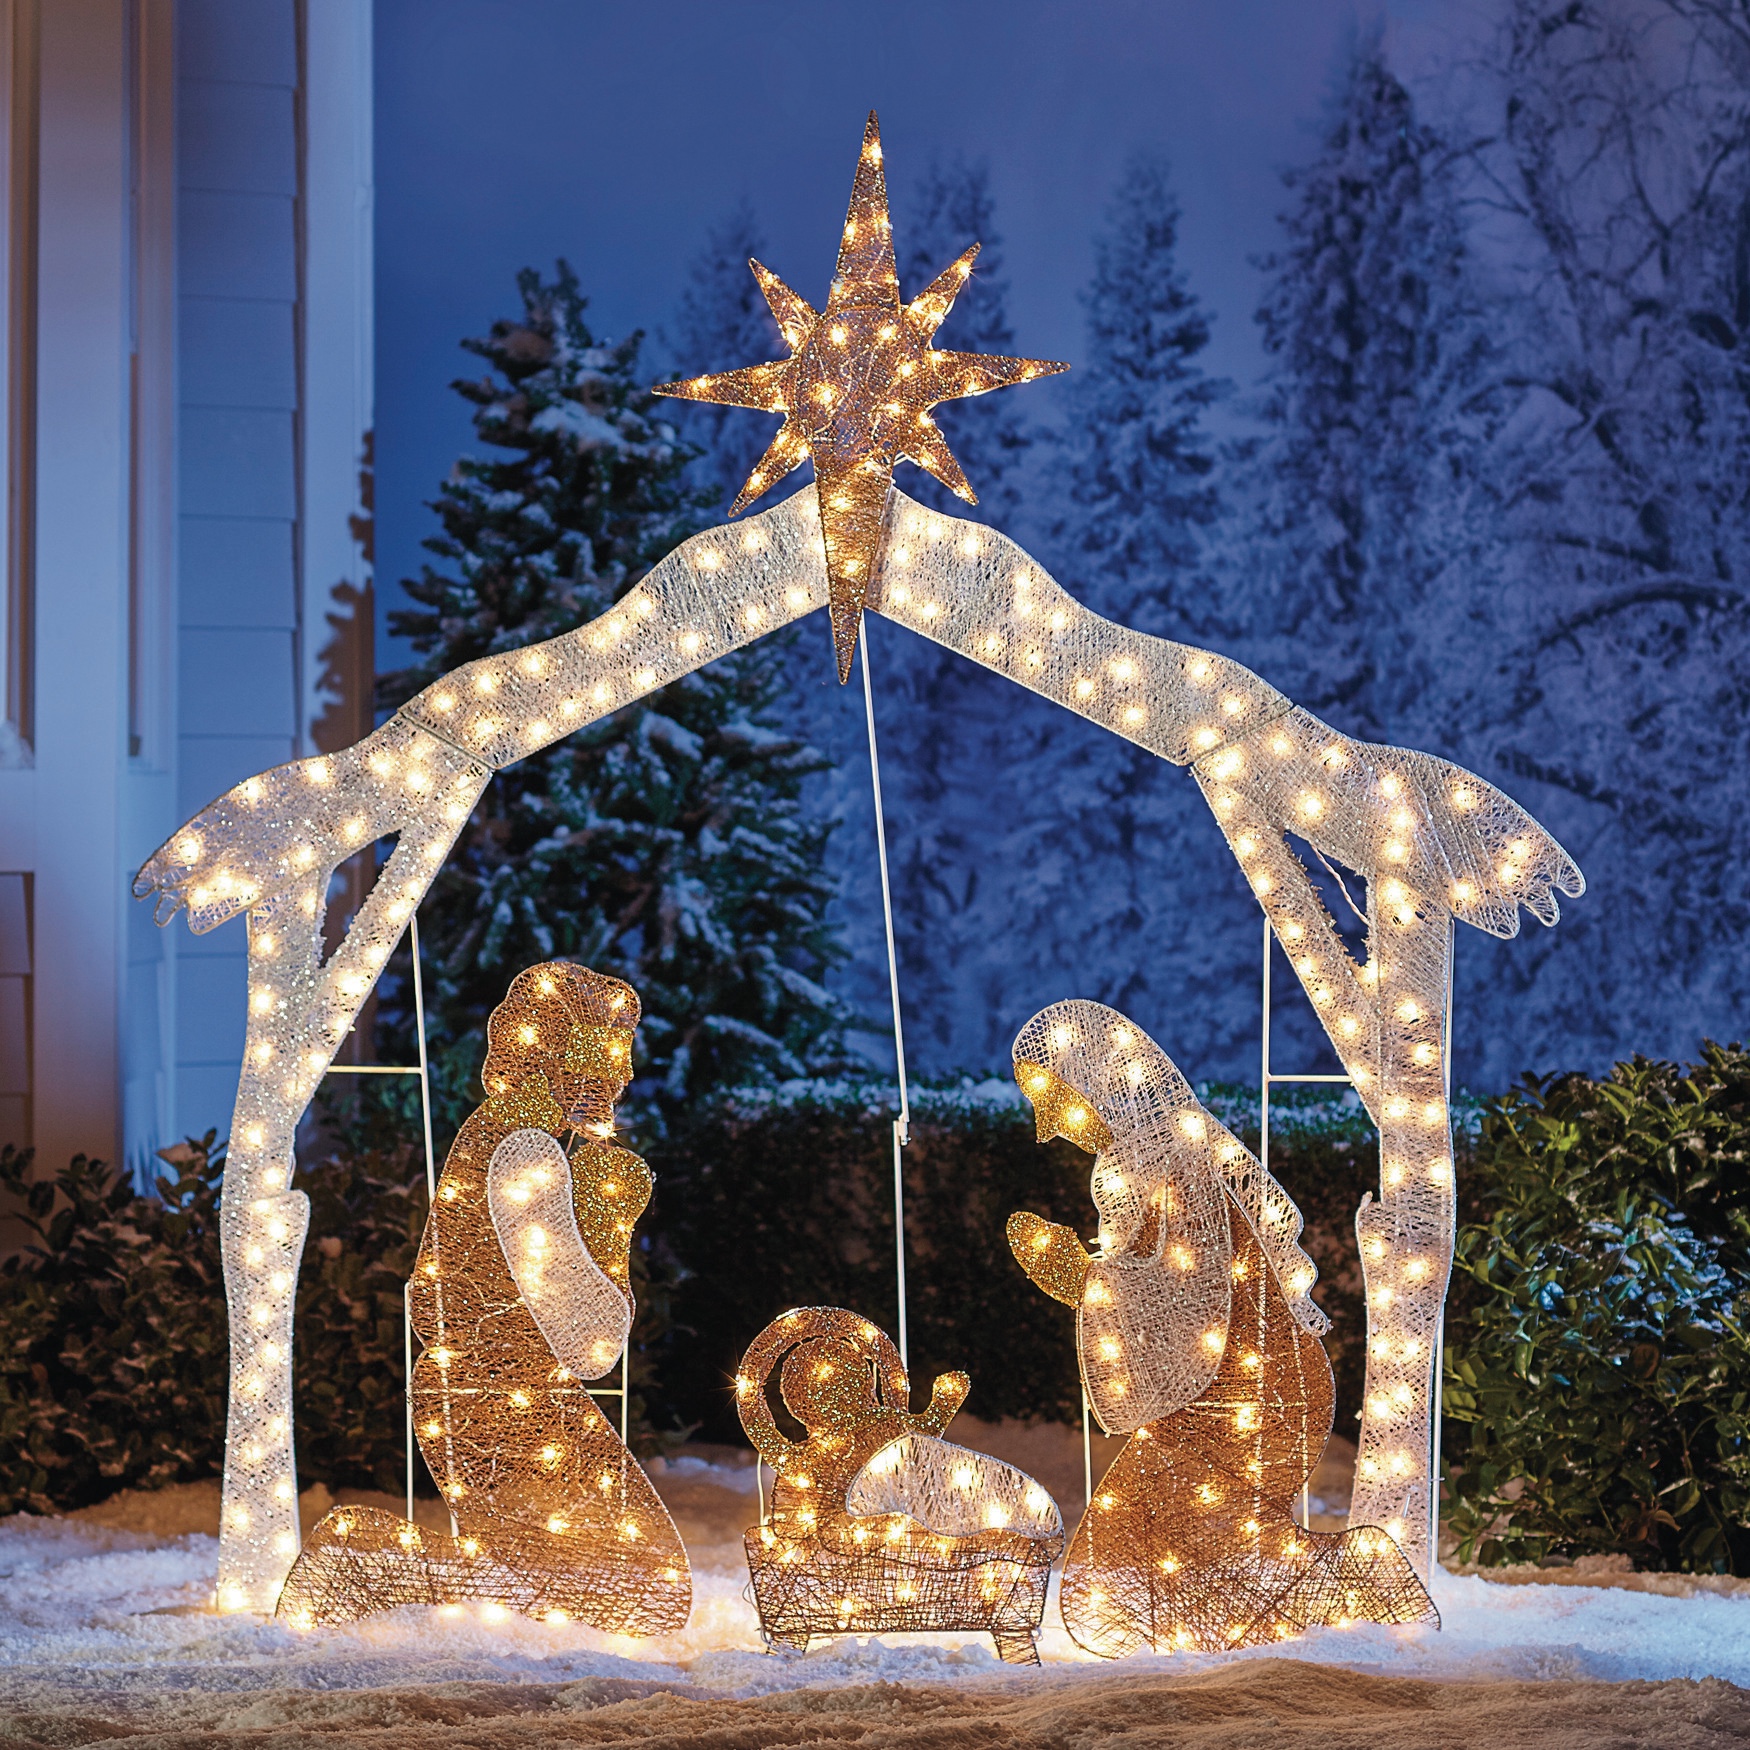 Crystal Splendor Outdoor Nativity Scene | Outdoor Christmas Lighted ...